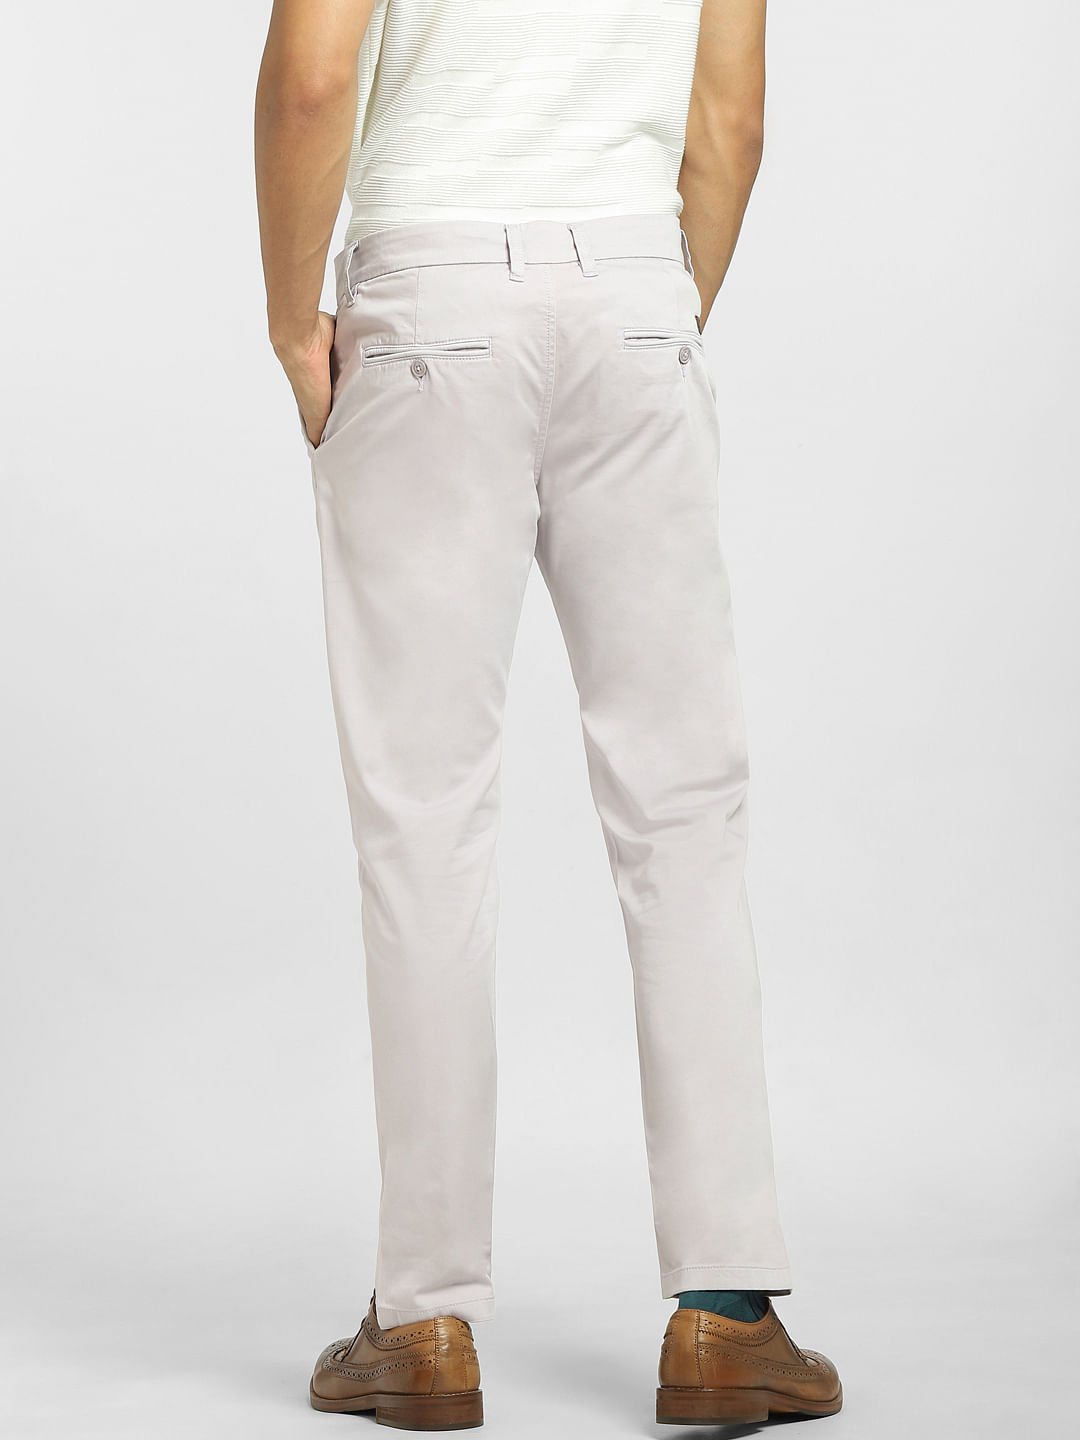 Buy Men's Cotton Lycra Casual Wear Regular Fit Pants|Cottonworld